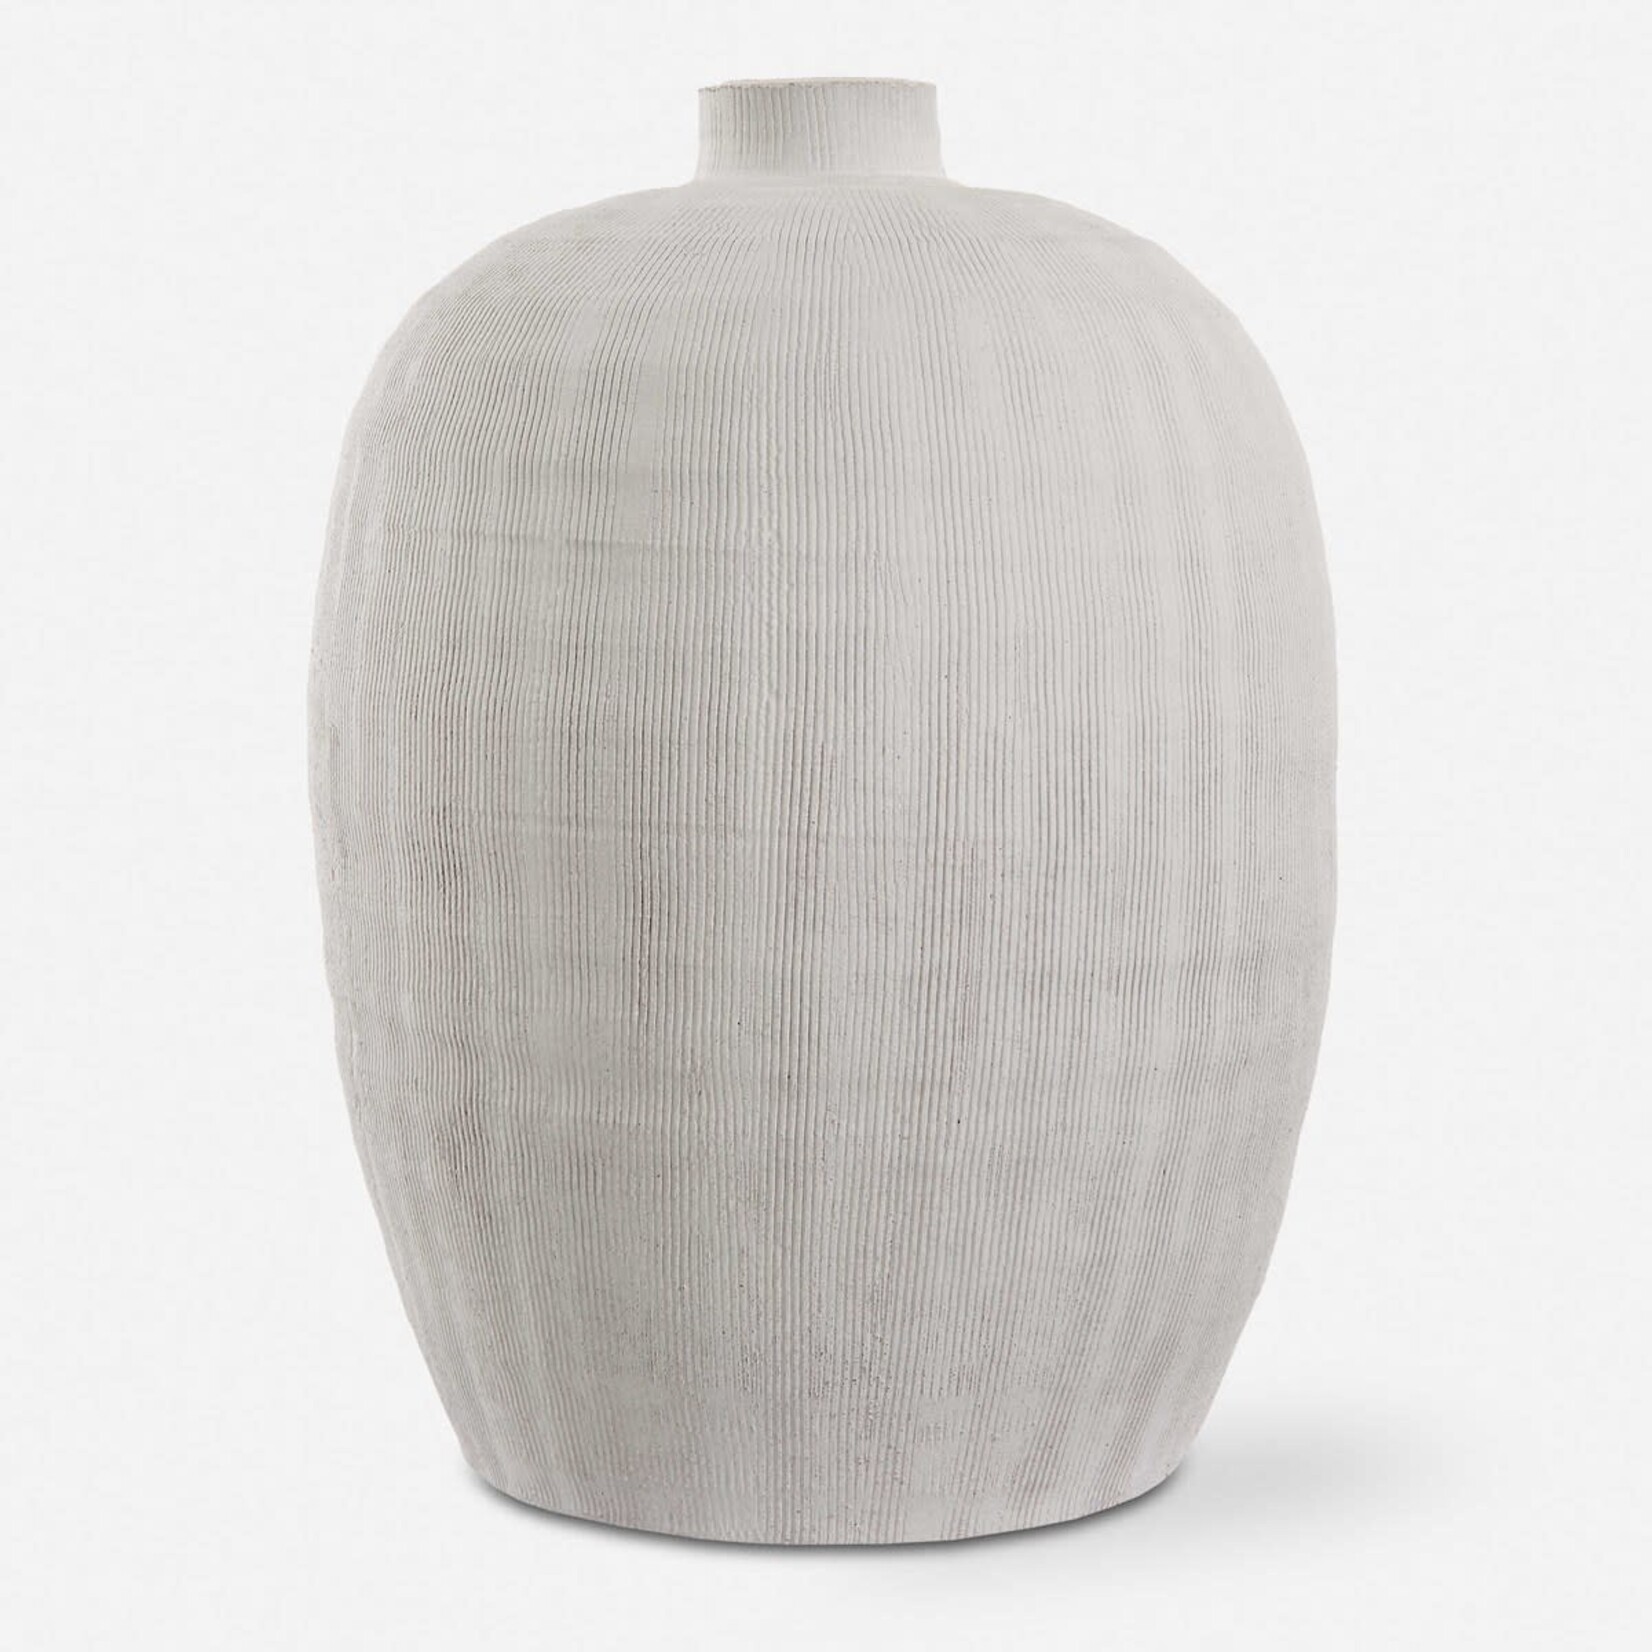 Outside The Box 14" Floreana White Etched Surface Ceramic Vase